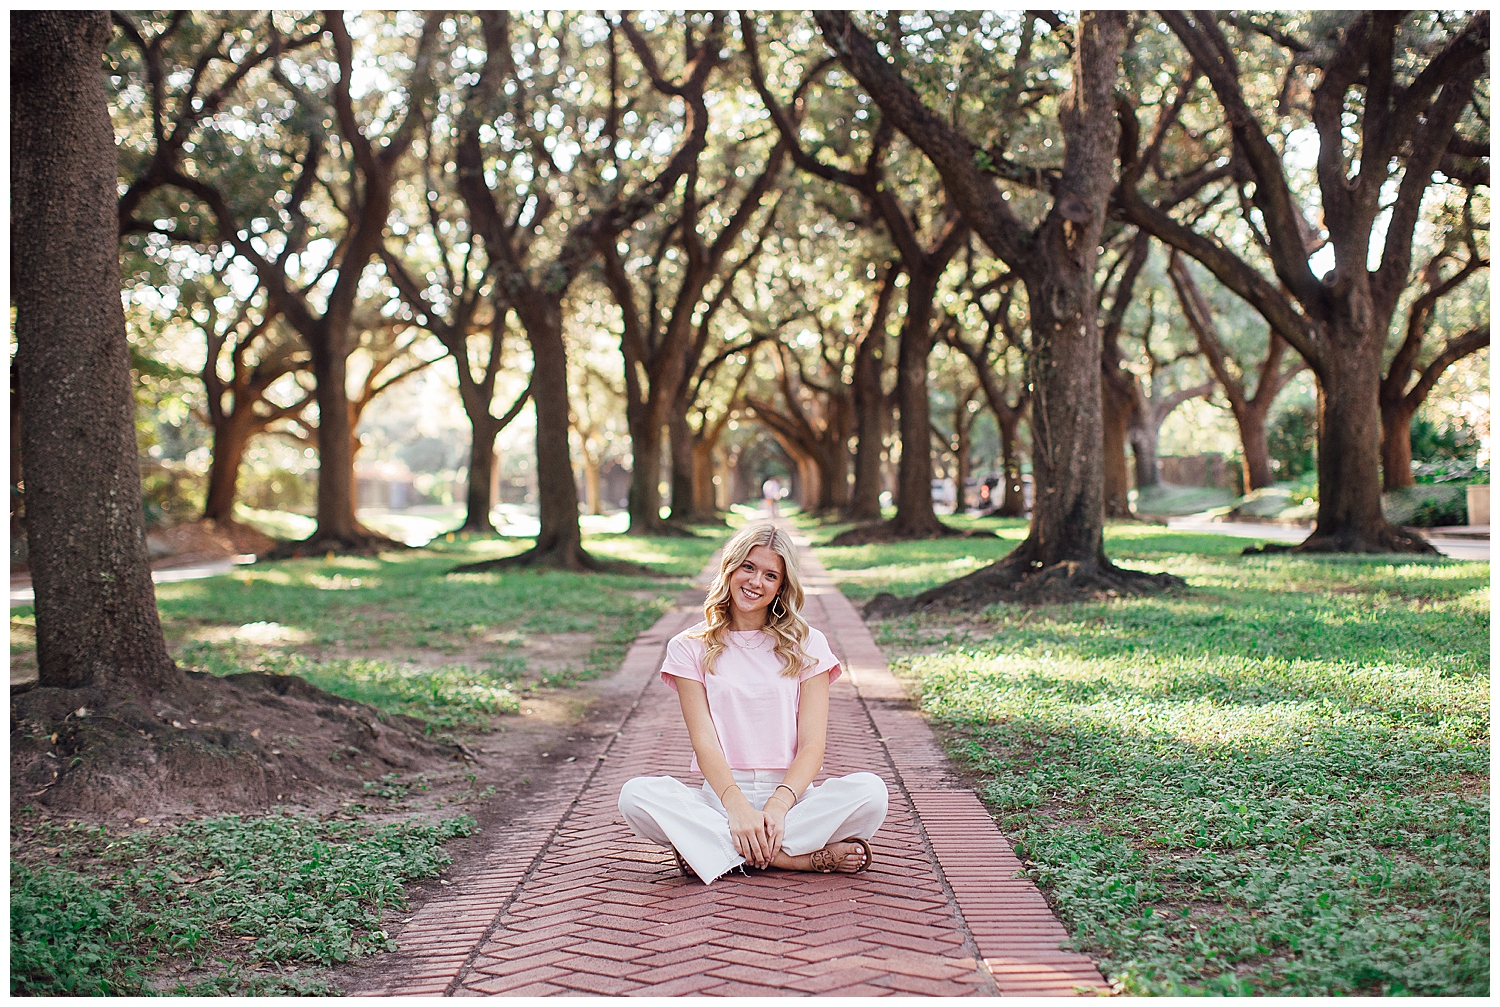 high school senior girl in white. pants pink shirt sitting on sidewalk senior photos Houston musuem district treeline